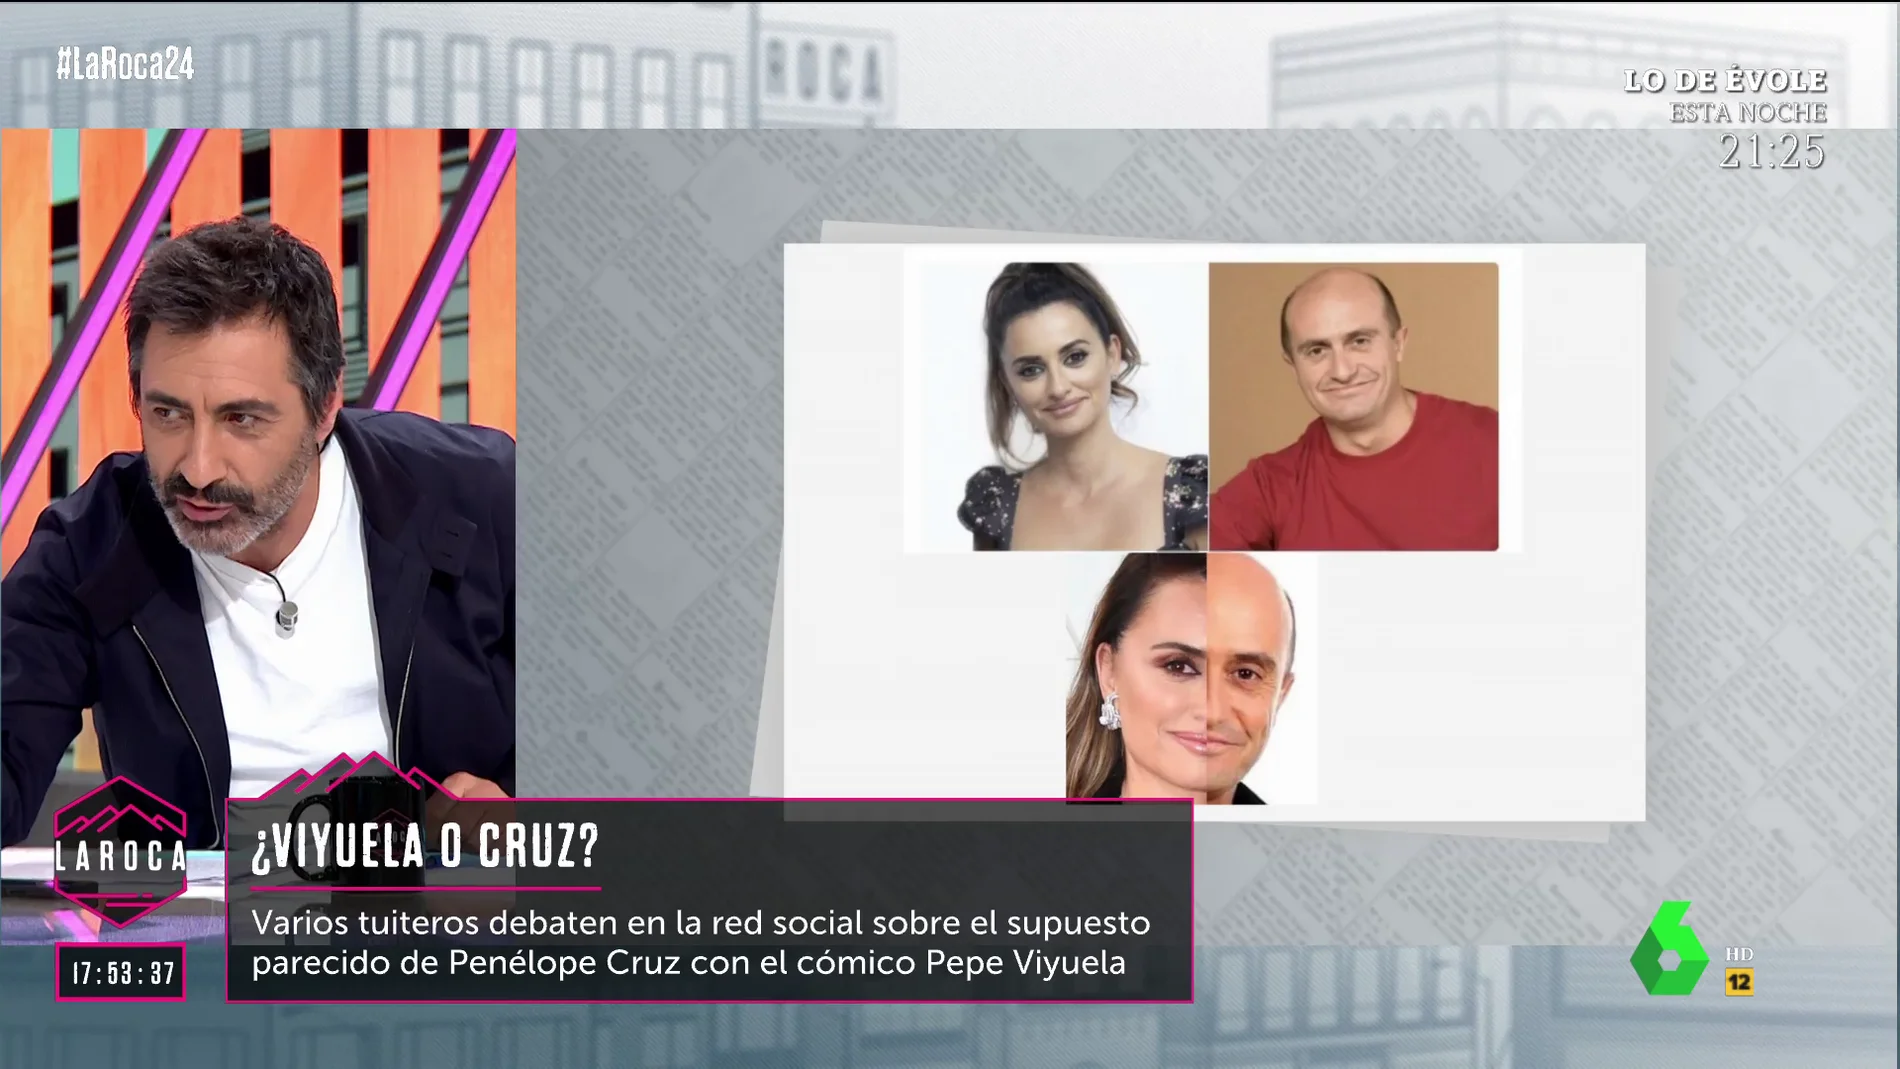 Juan del Val reaviva la polémica: "Penélope Cruz se parece muchísimo a Pepe Viyuela"